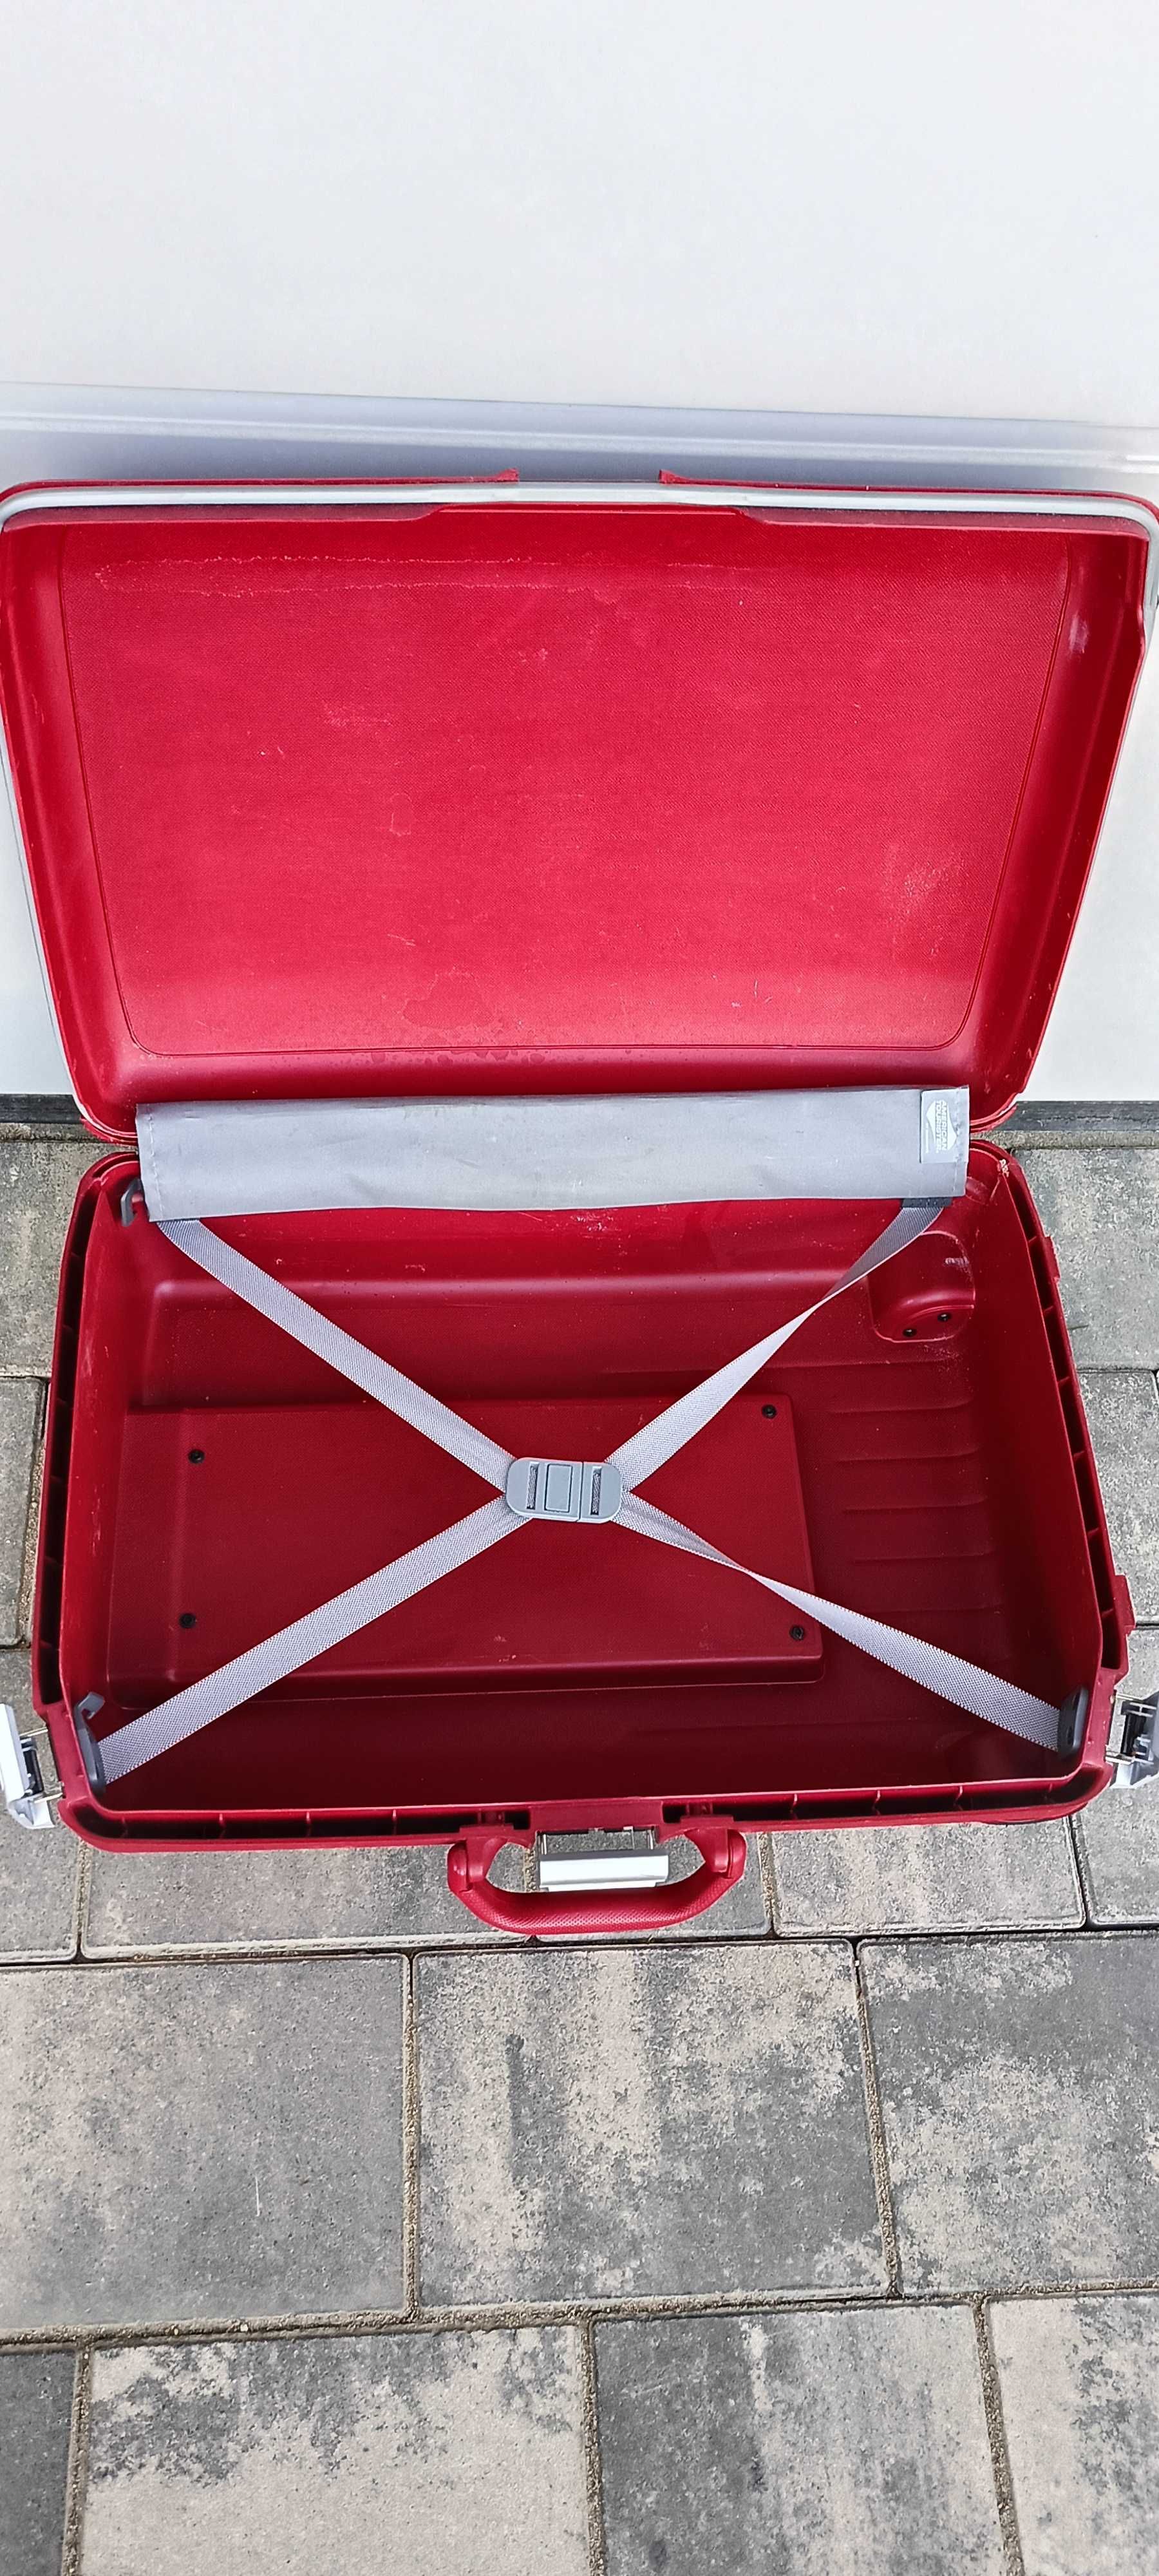 American Tourister by Samsonite walizka podróżna twarda na kółkach